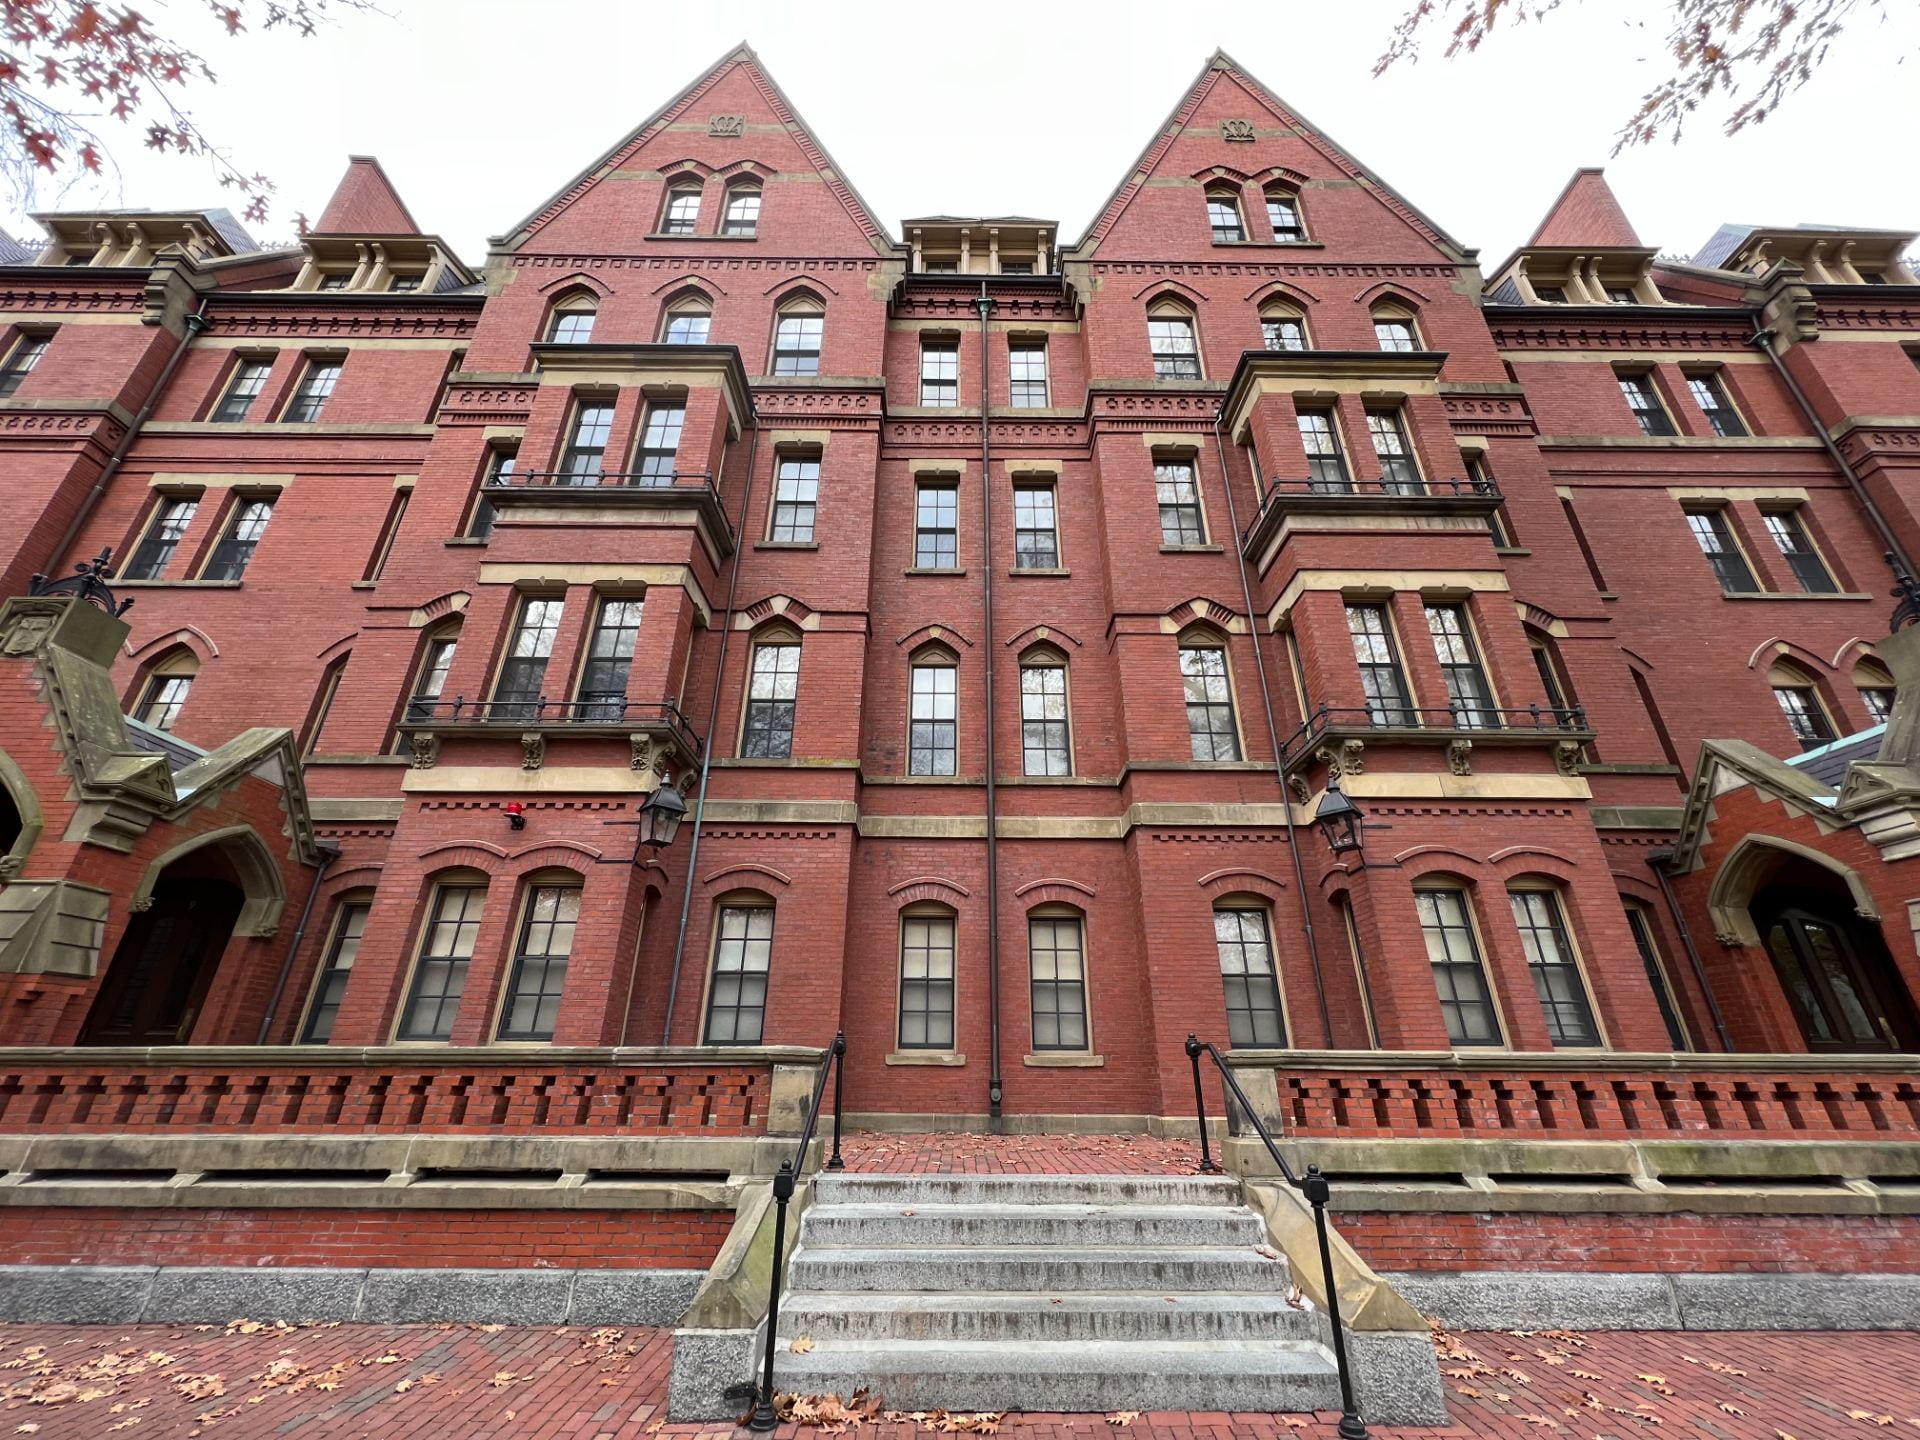 Upward view of a building in Harvard Yard